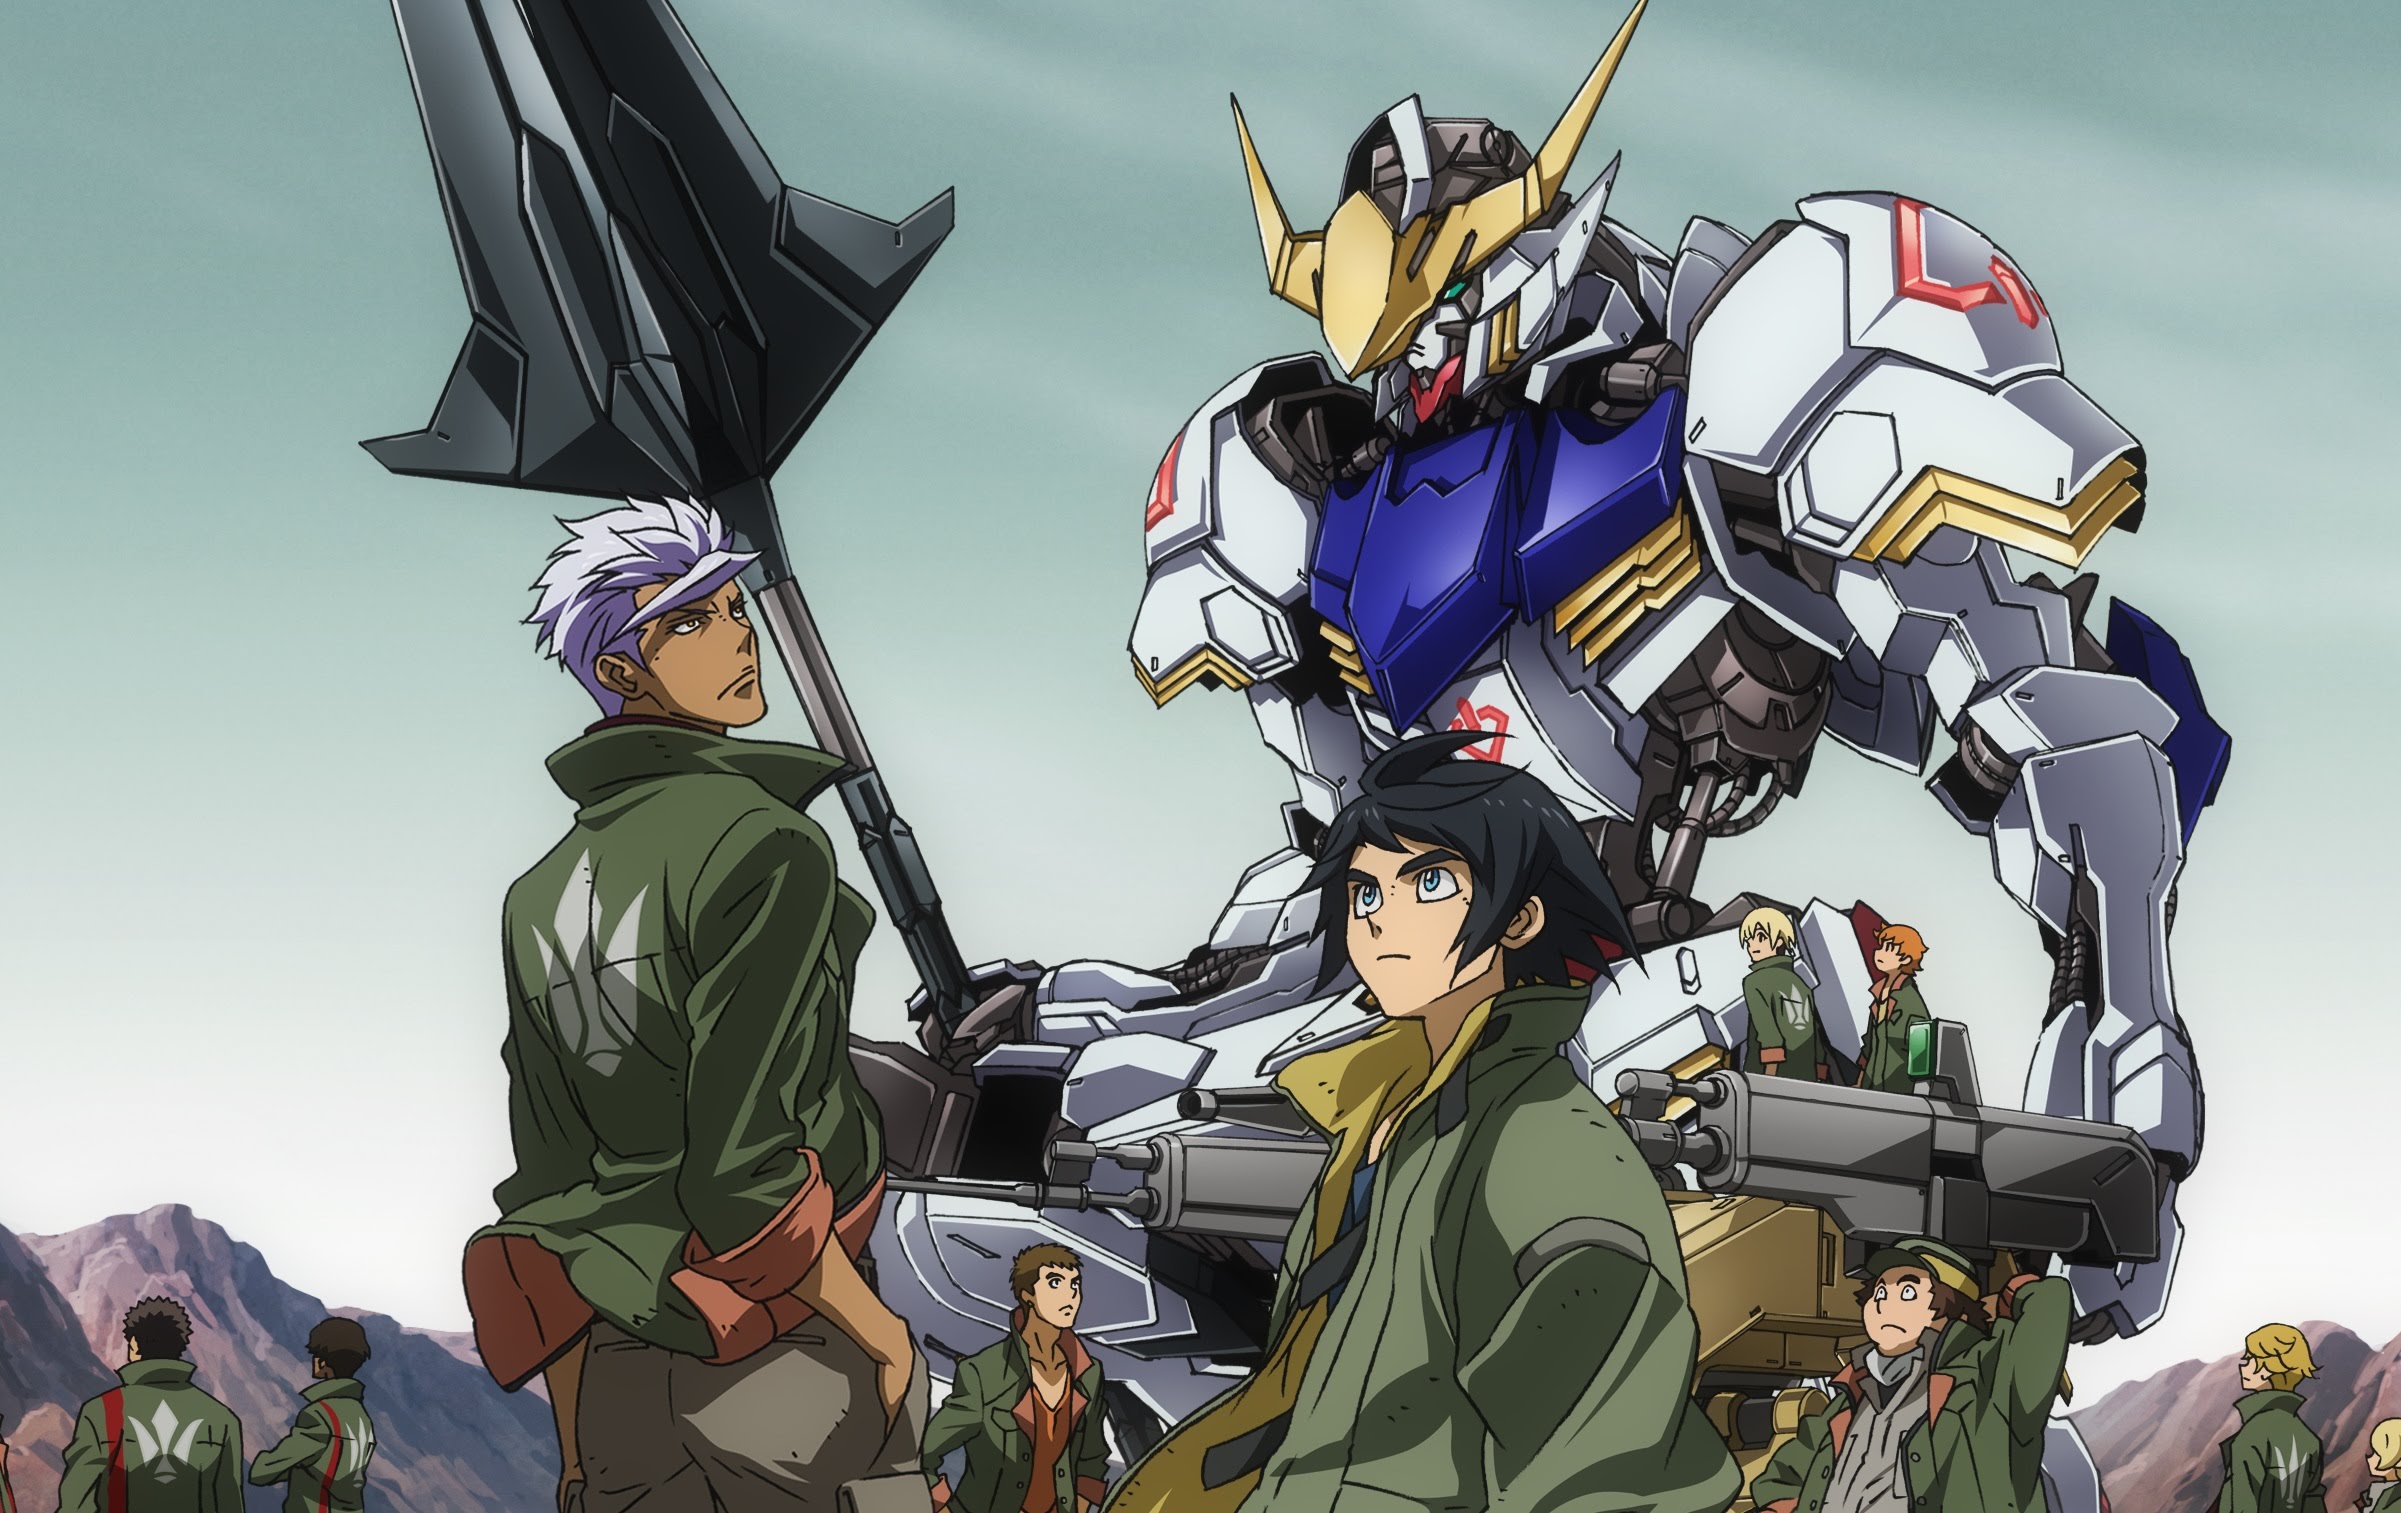 Mobile Suit Gundam: Iron-Blooded Orphans Backgrounds, Compatible - PC, Mobile, Gadgets| 2401x1513 px